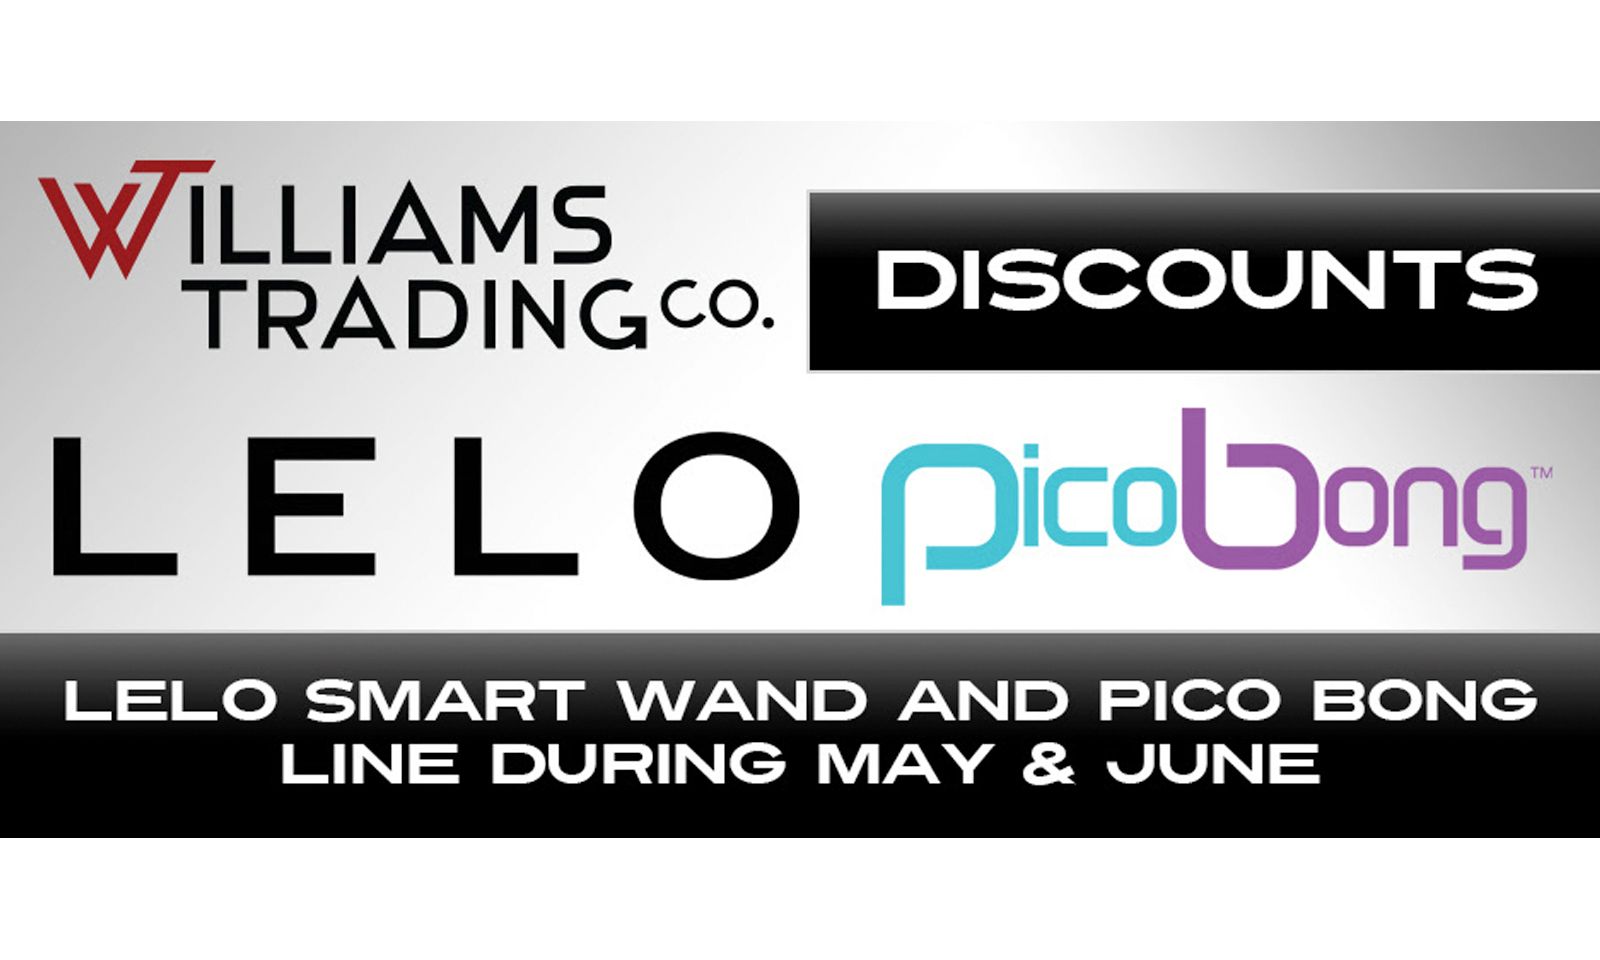 LELO Smart Wand, Pico Bong Line Discounted During May, June At Williams Trading